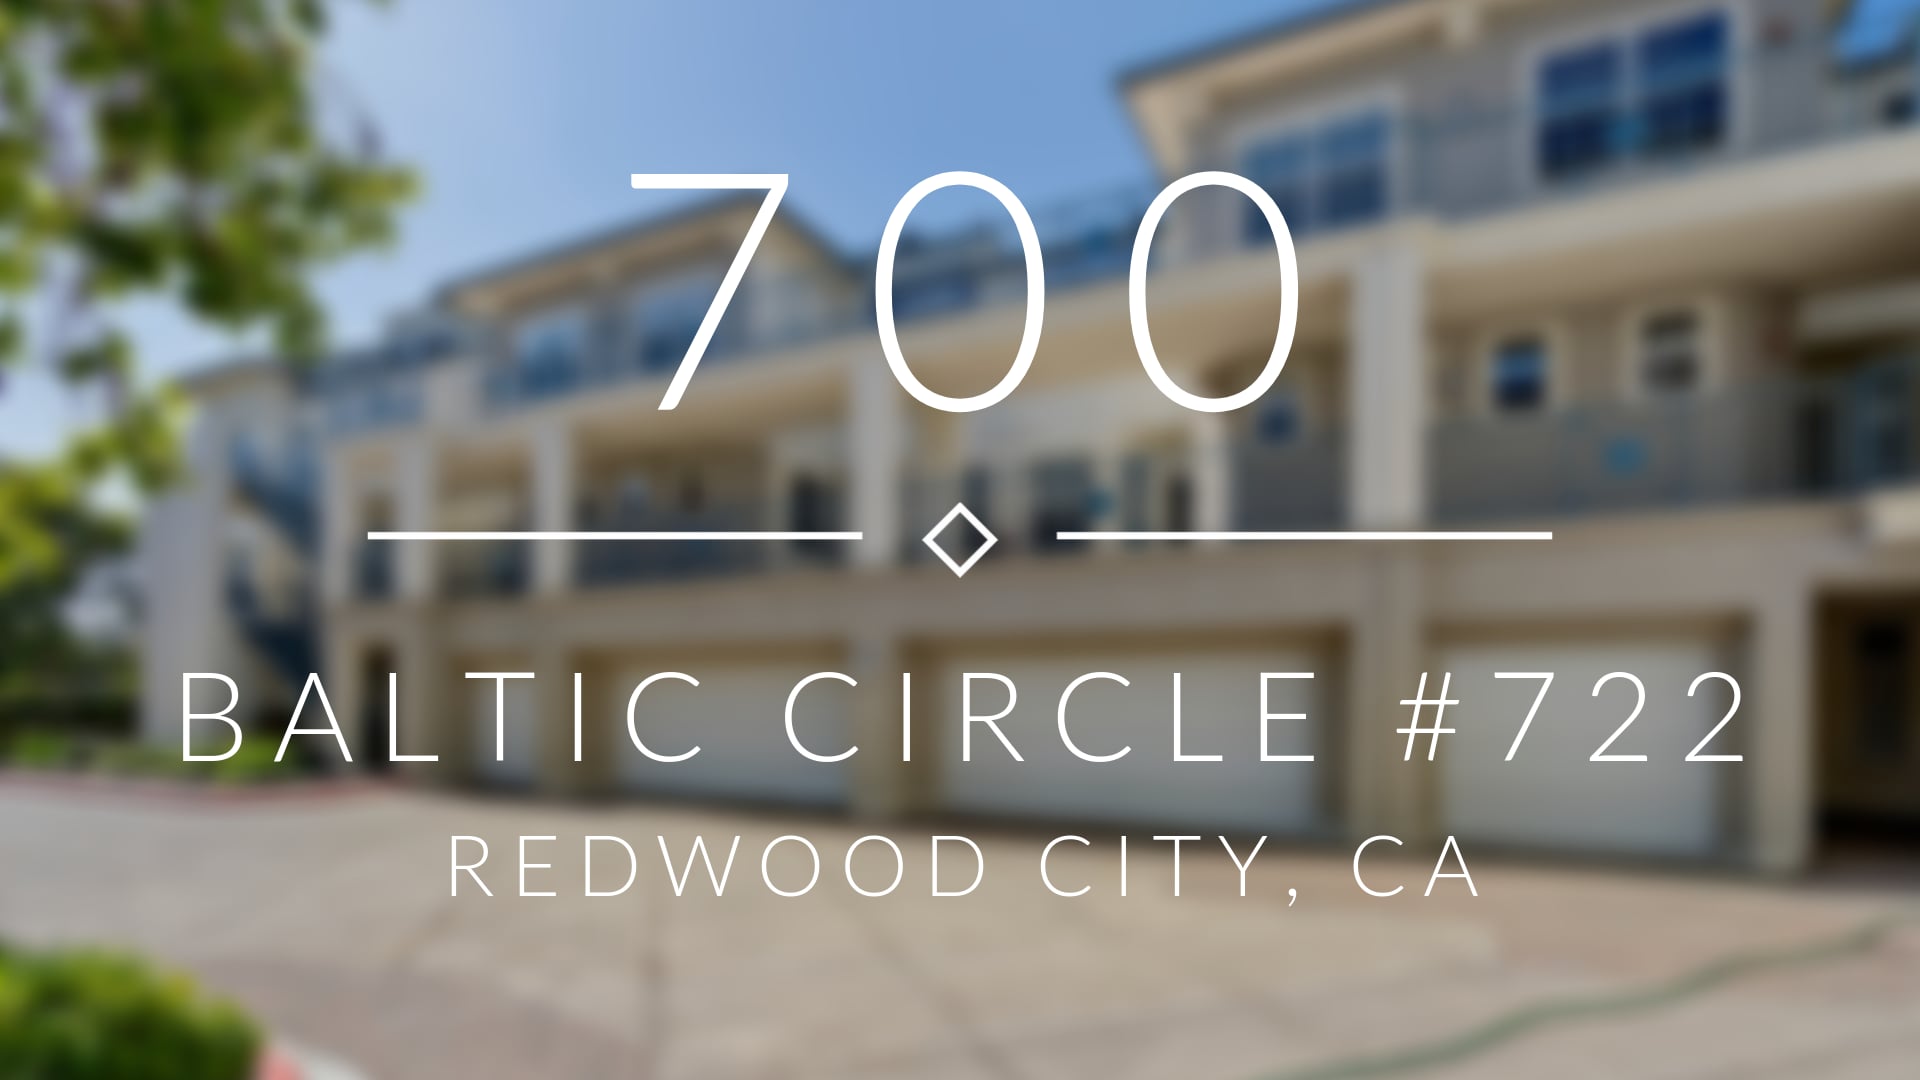 700 Baltic Circle #722 Redwood Metropolis, CA Unbranded Video Tour